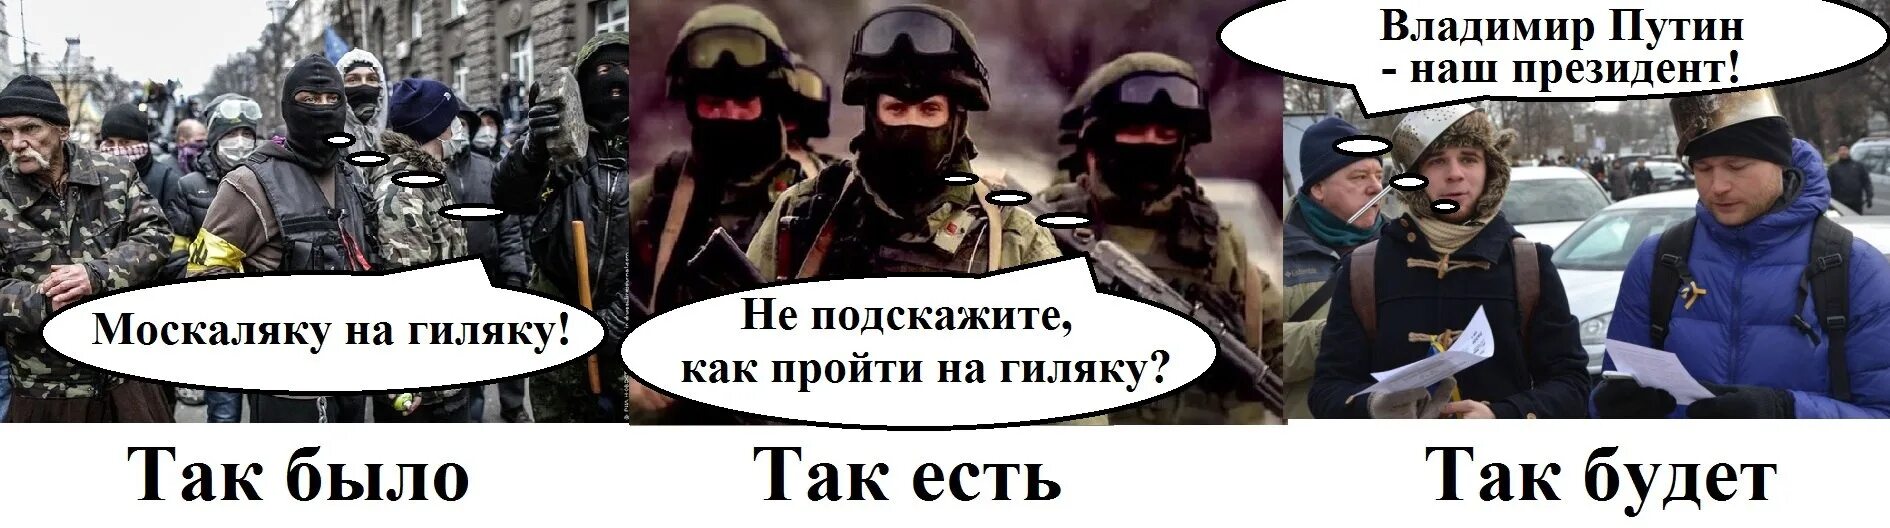 Москаляку на гиляку. Украинцы: москаляку на гиляку. Лозунг украинских националистов москаляку на гиляку. Москаляку на гиляку Мем.